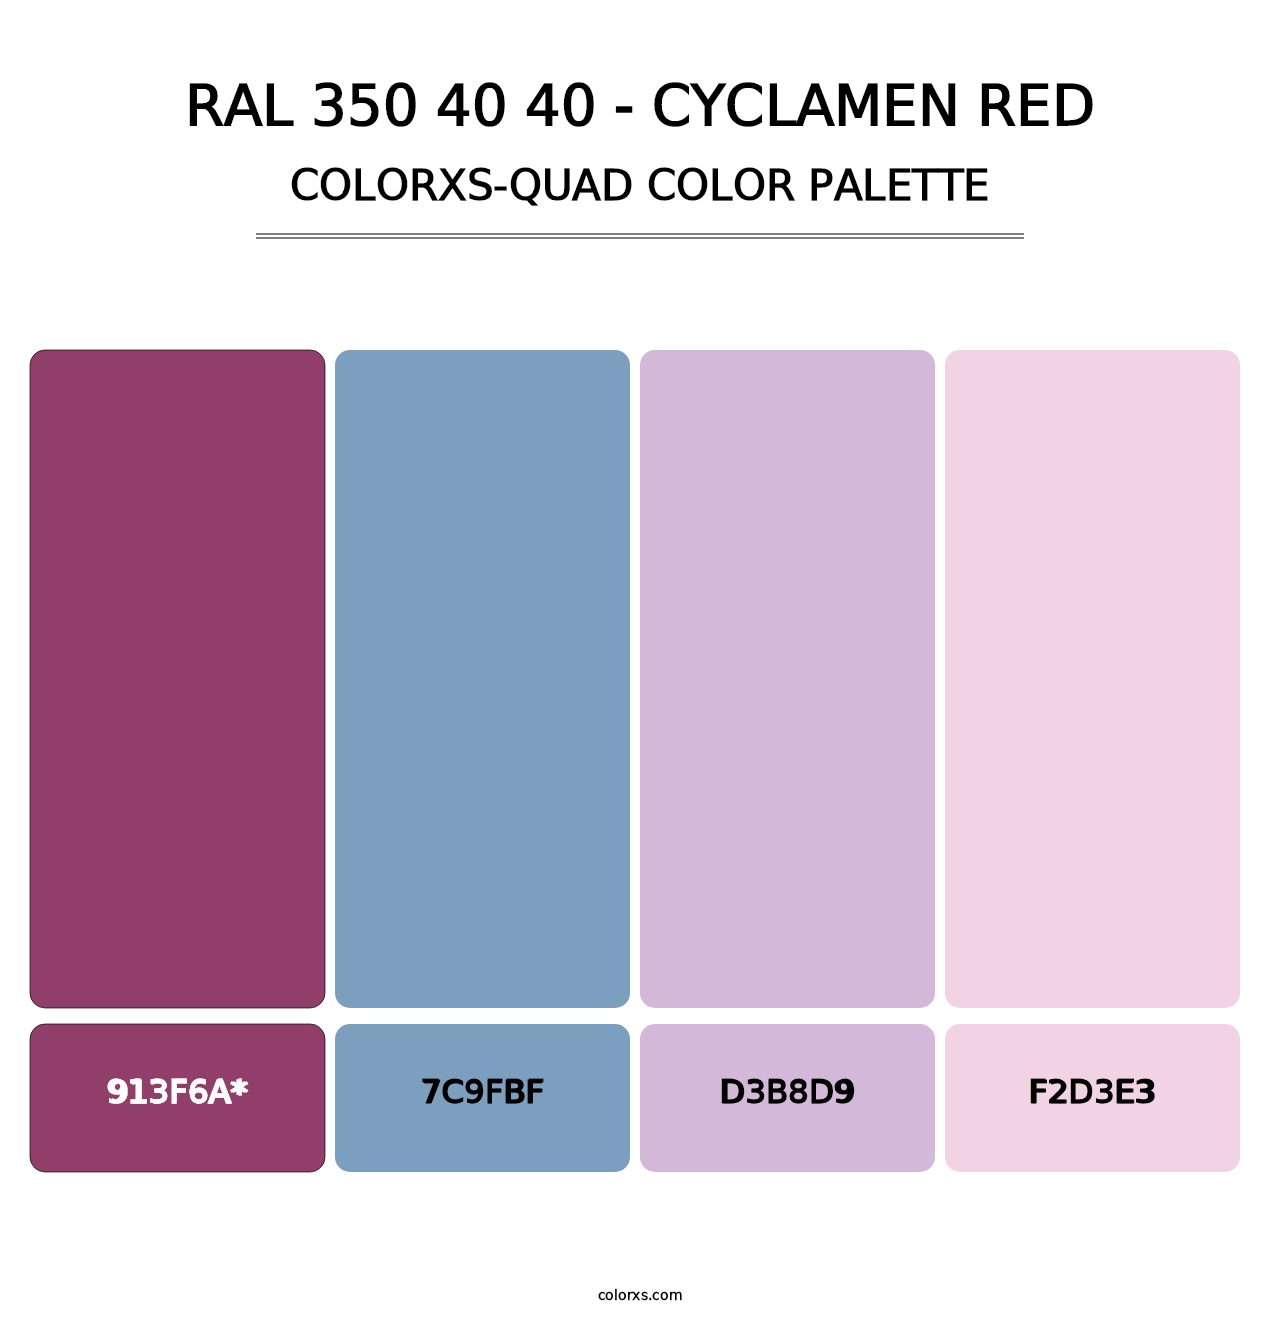 RAL 350 40 40 - Cyclamen Red - Colorxs Quad Palette